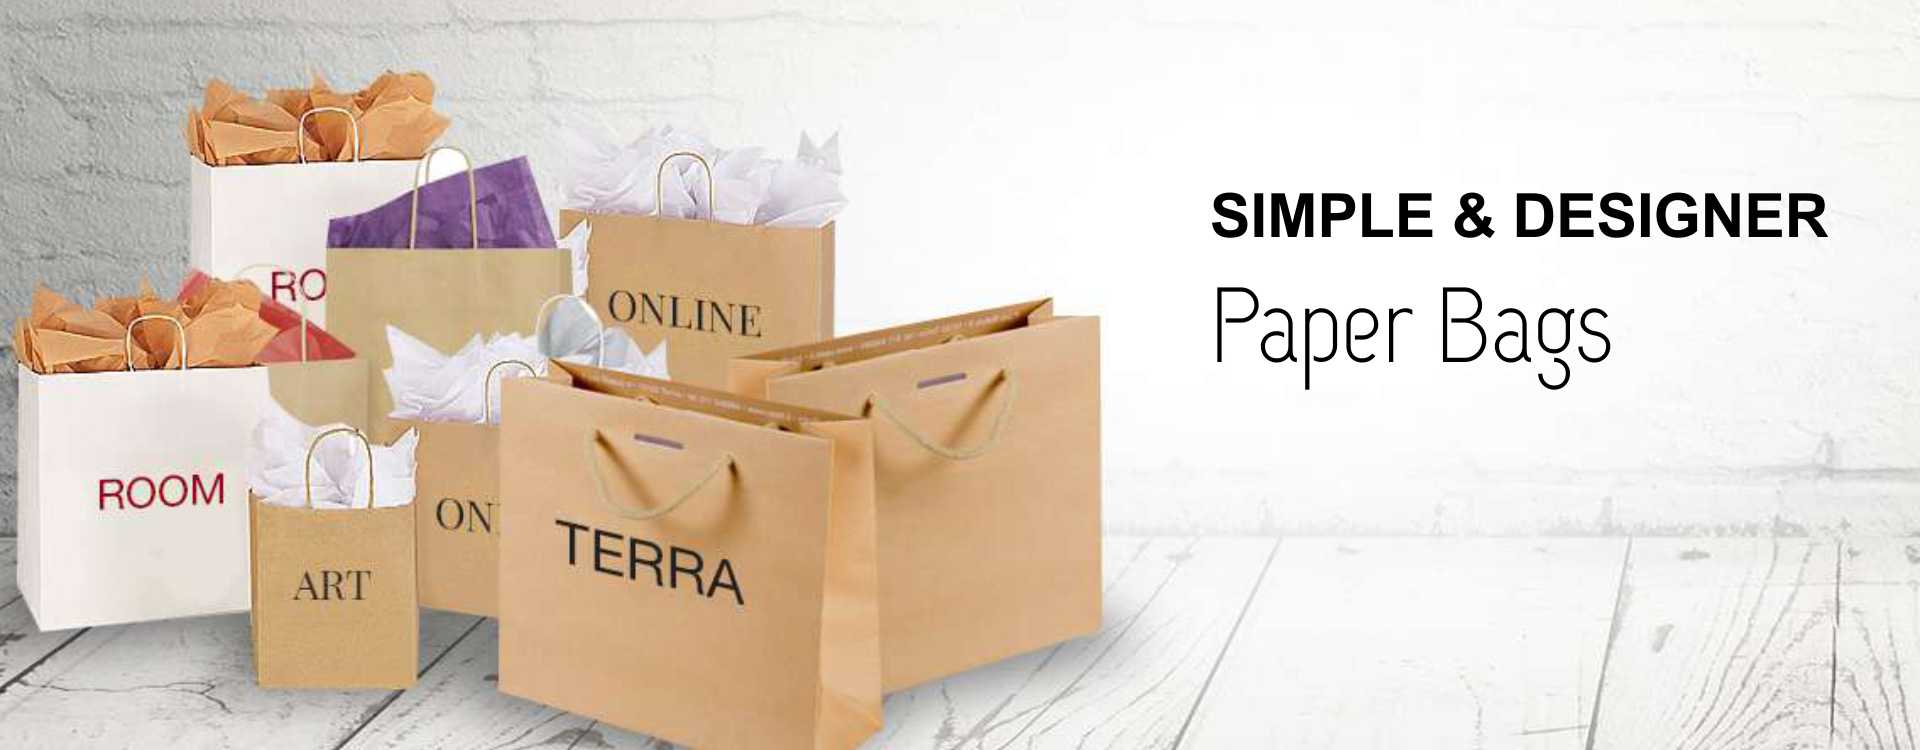 Paper Bag Manufacturers in ind..